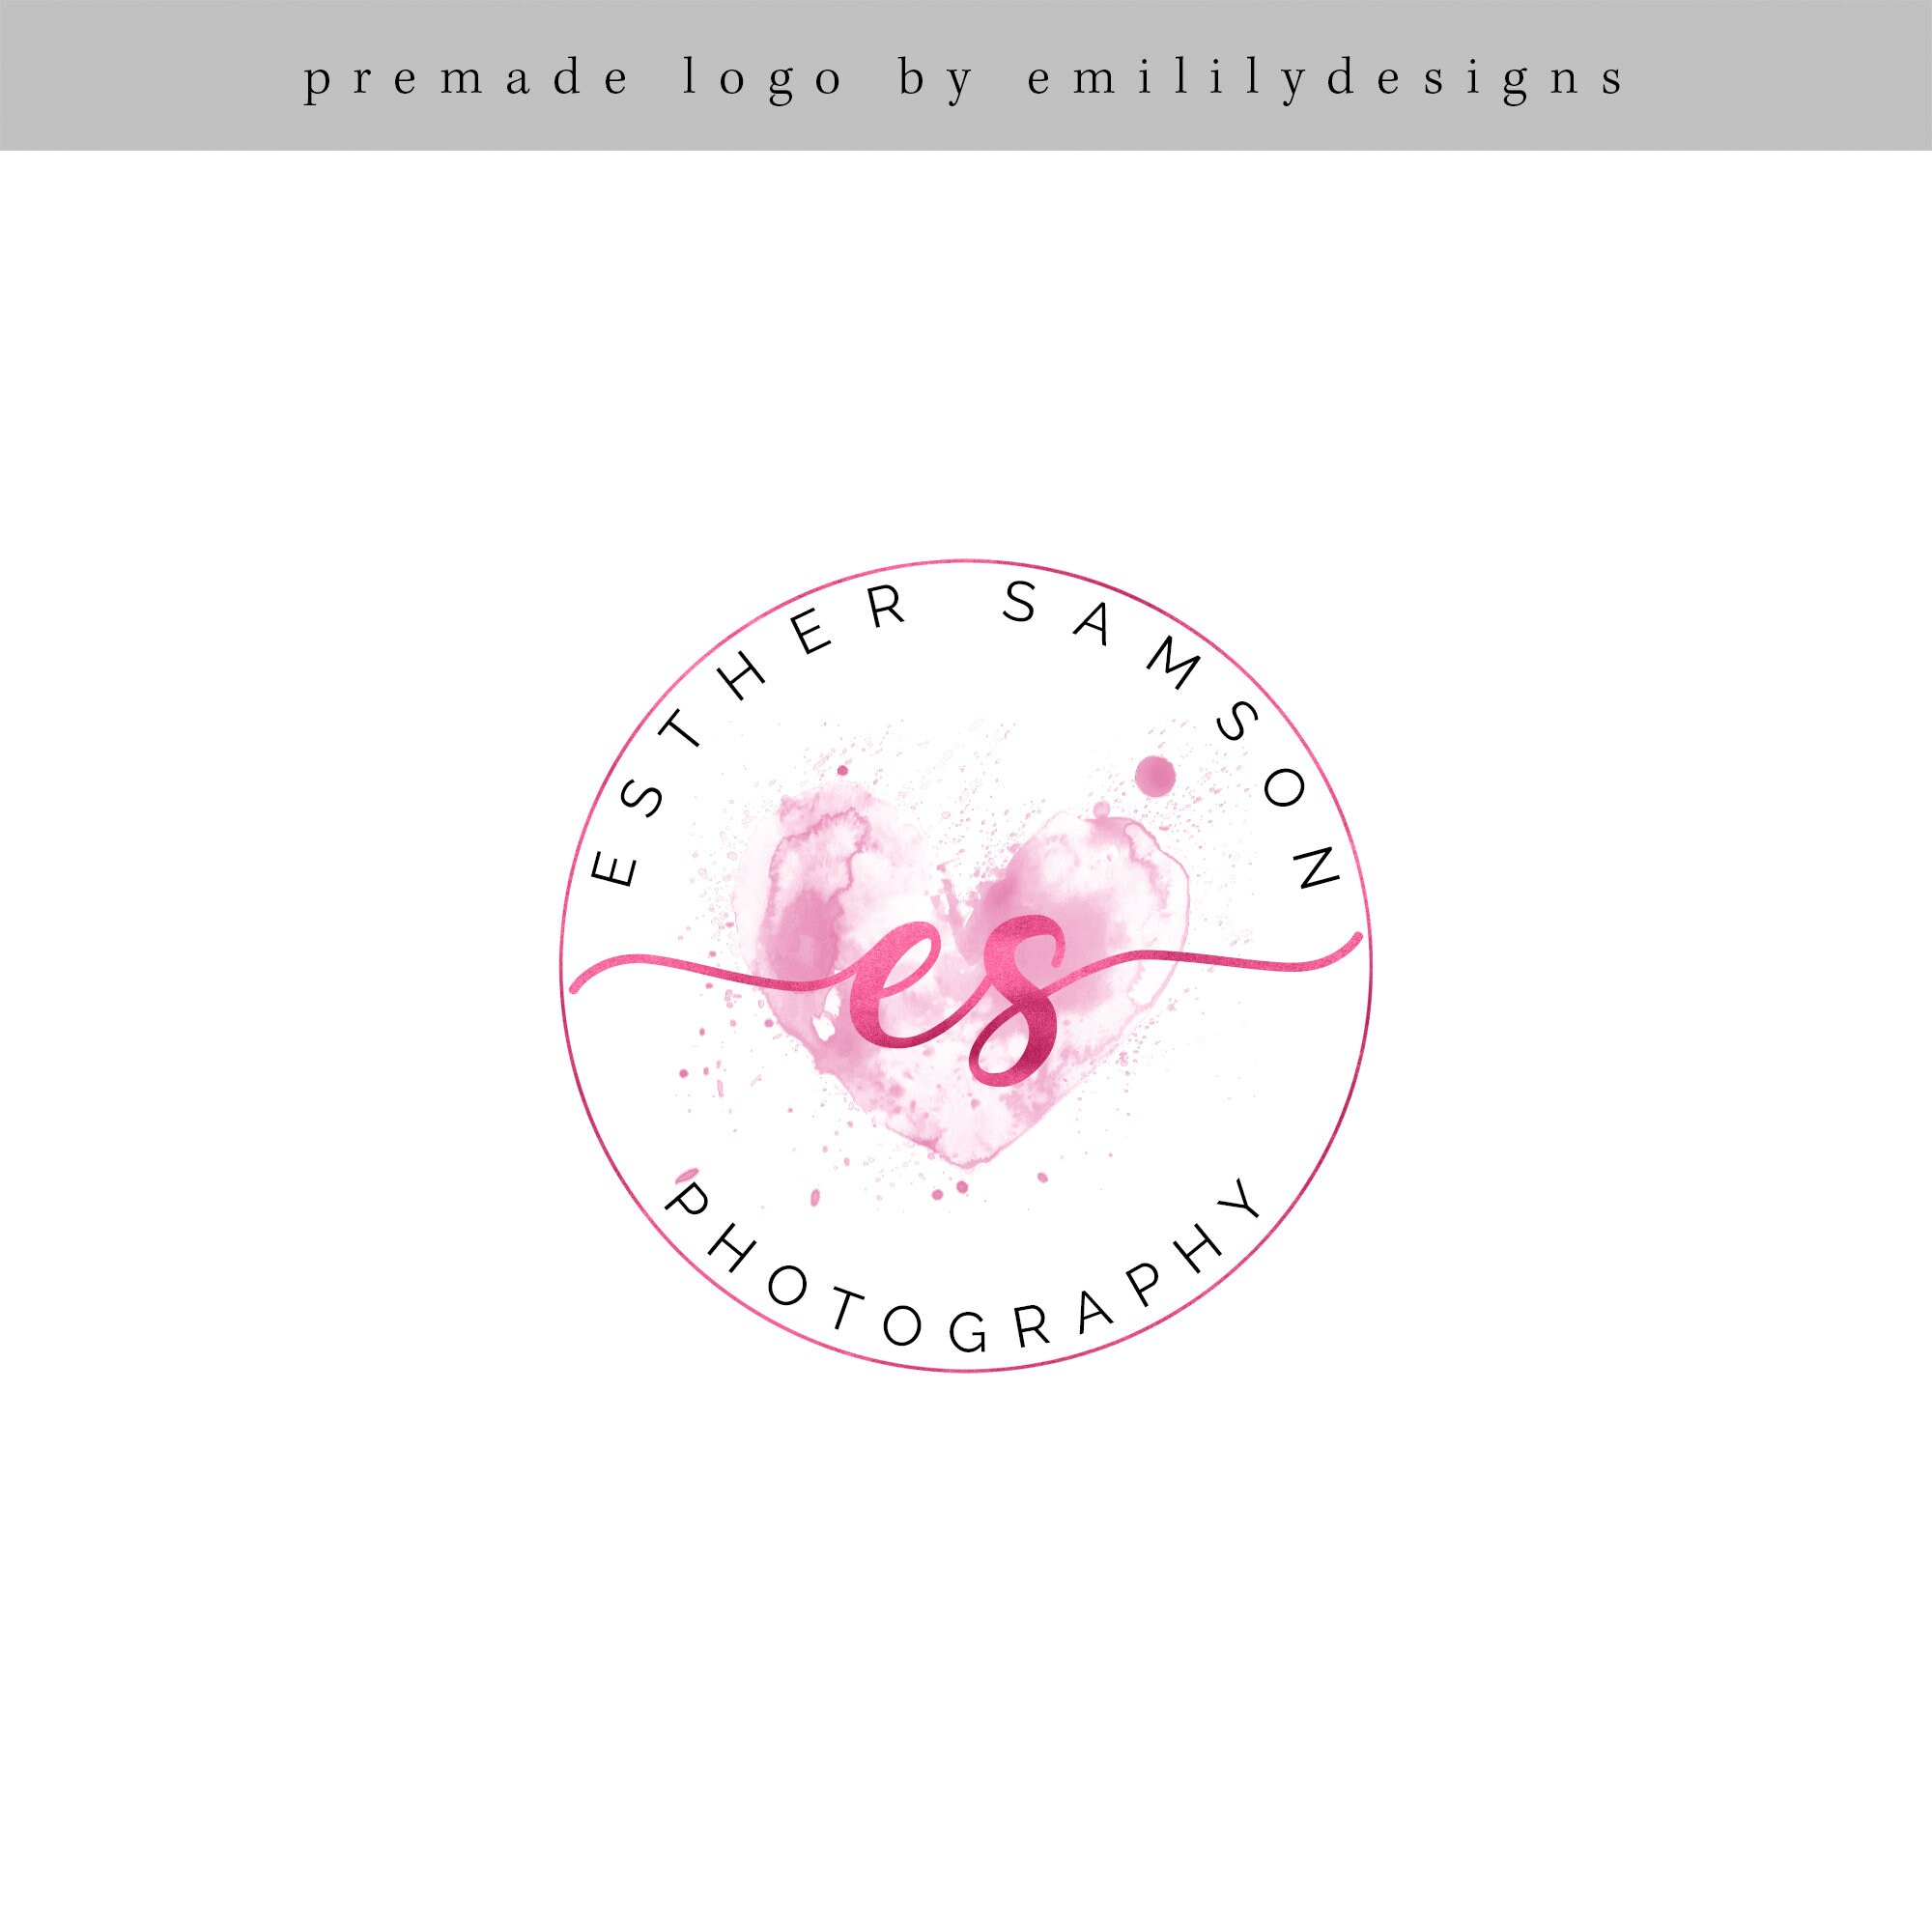 Exclusive Logo 674069, V And Heart Logo